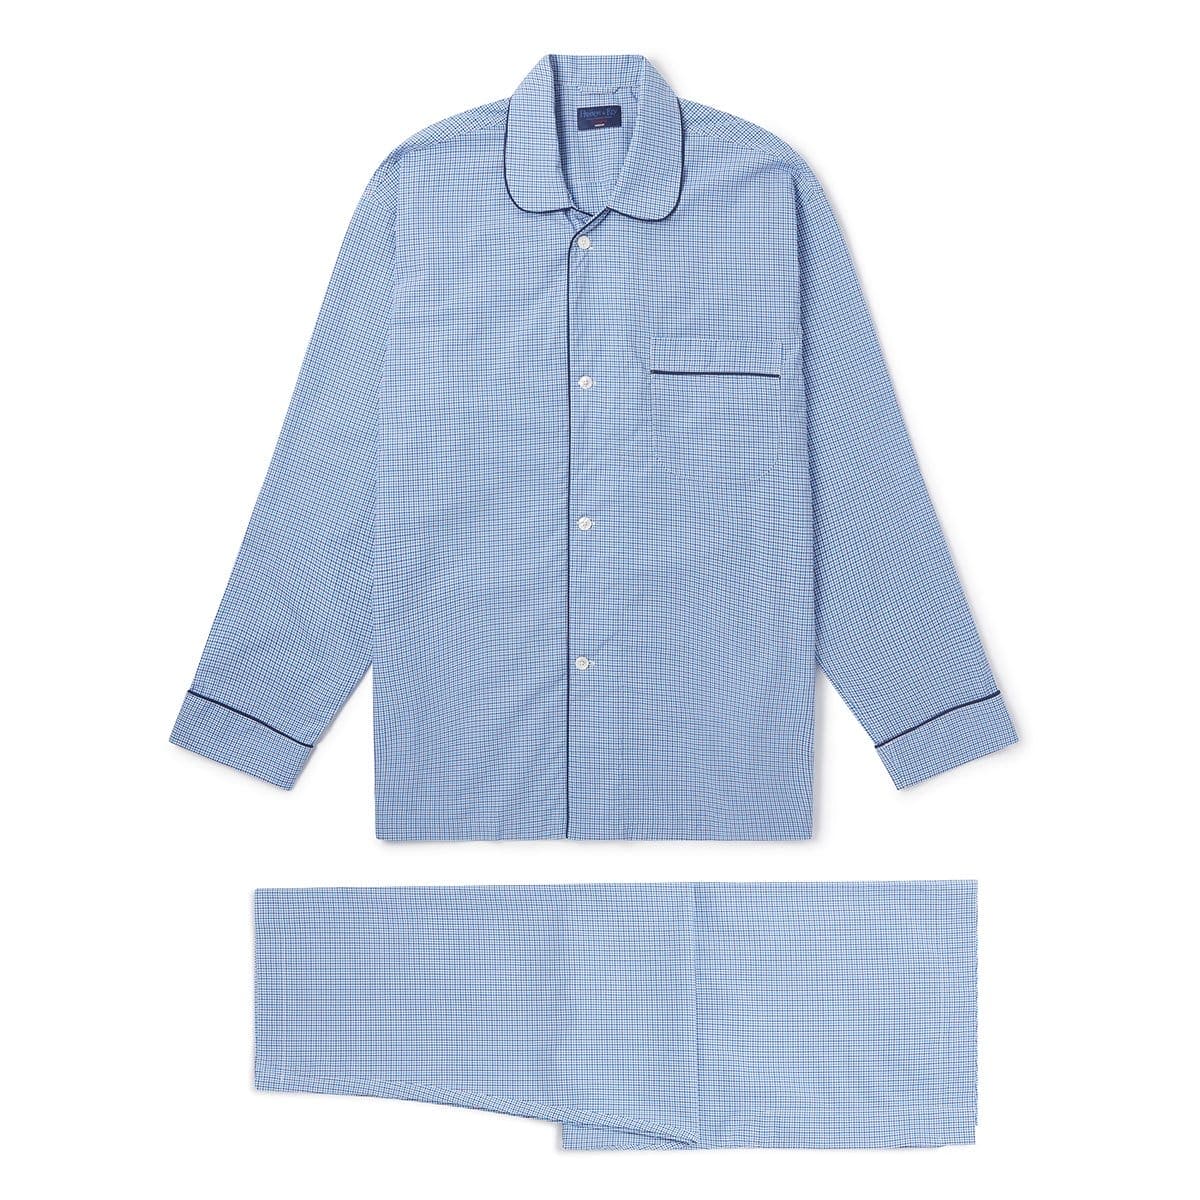 Aqua Blue & Navy Graph Overcheck Cotton Pyjamas With Navy Piping